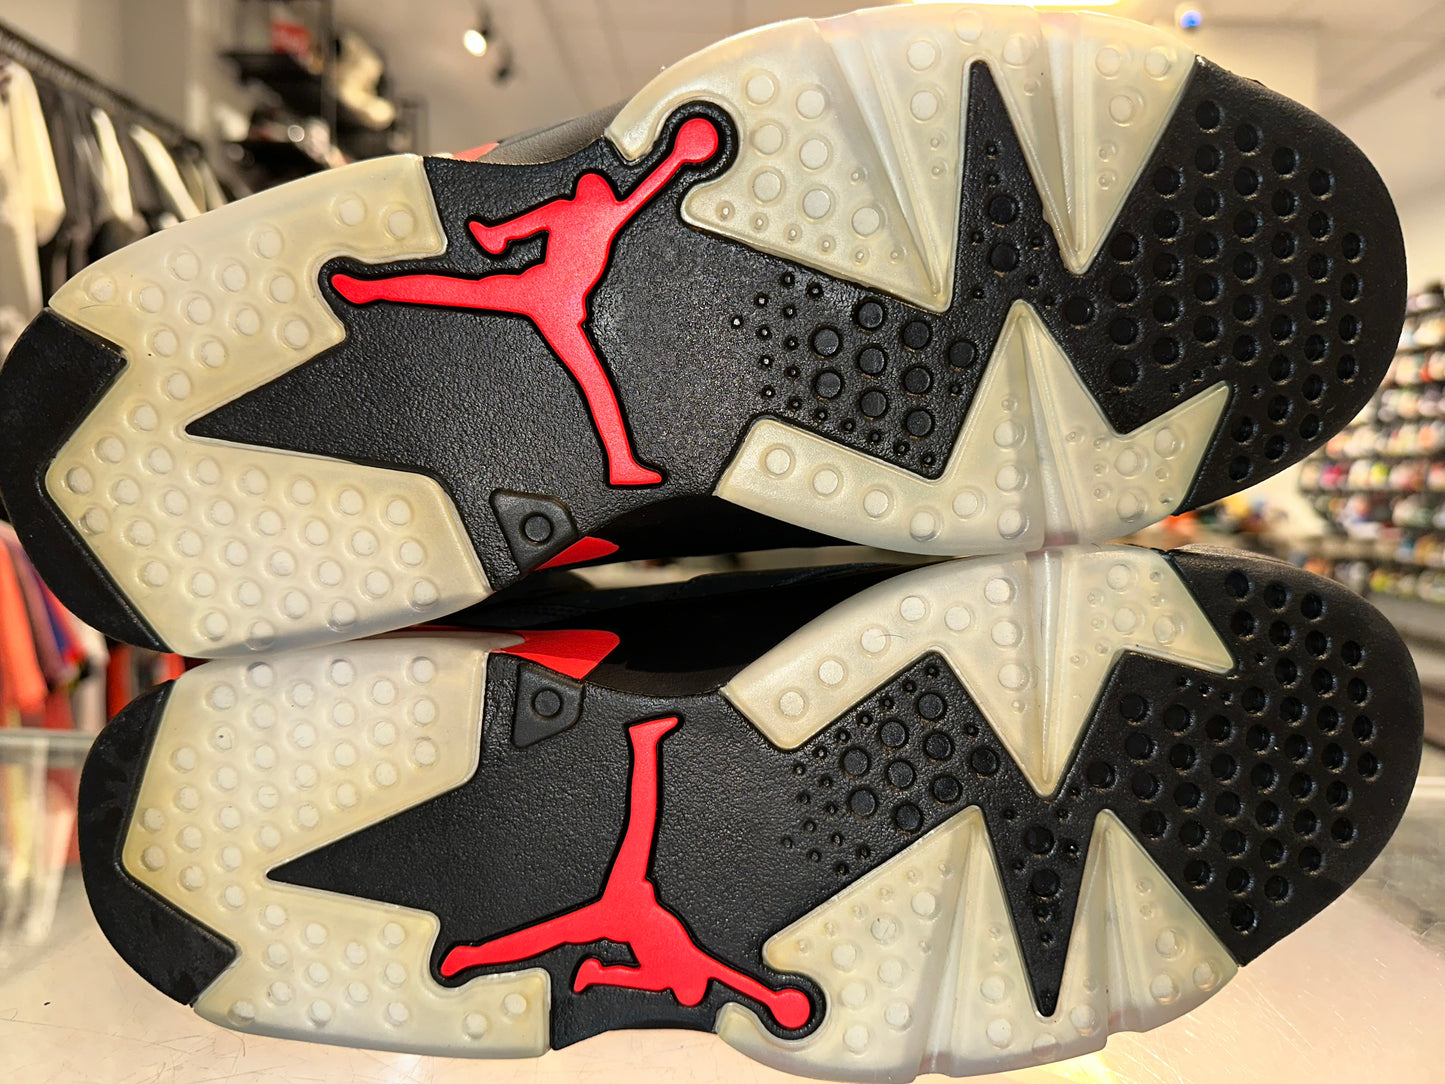 Size 10.5 Air Jordan 6 “Black Infrared” Brand New (Mall)